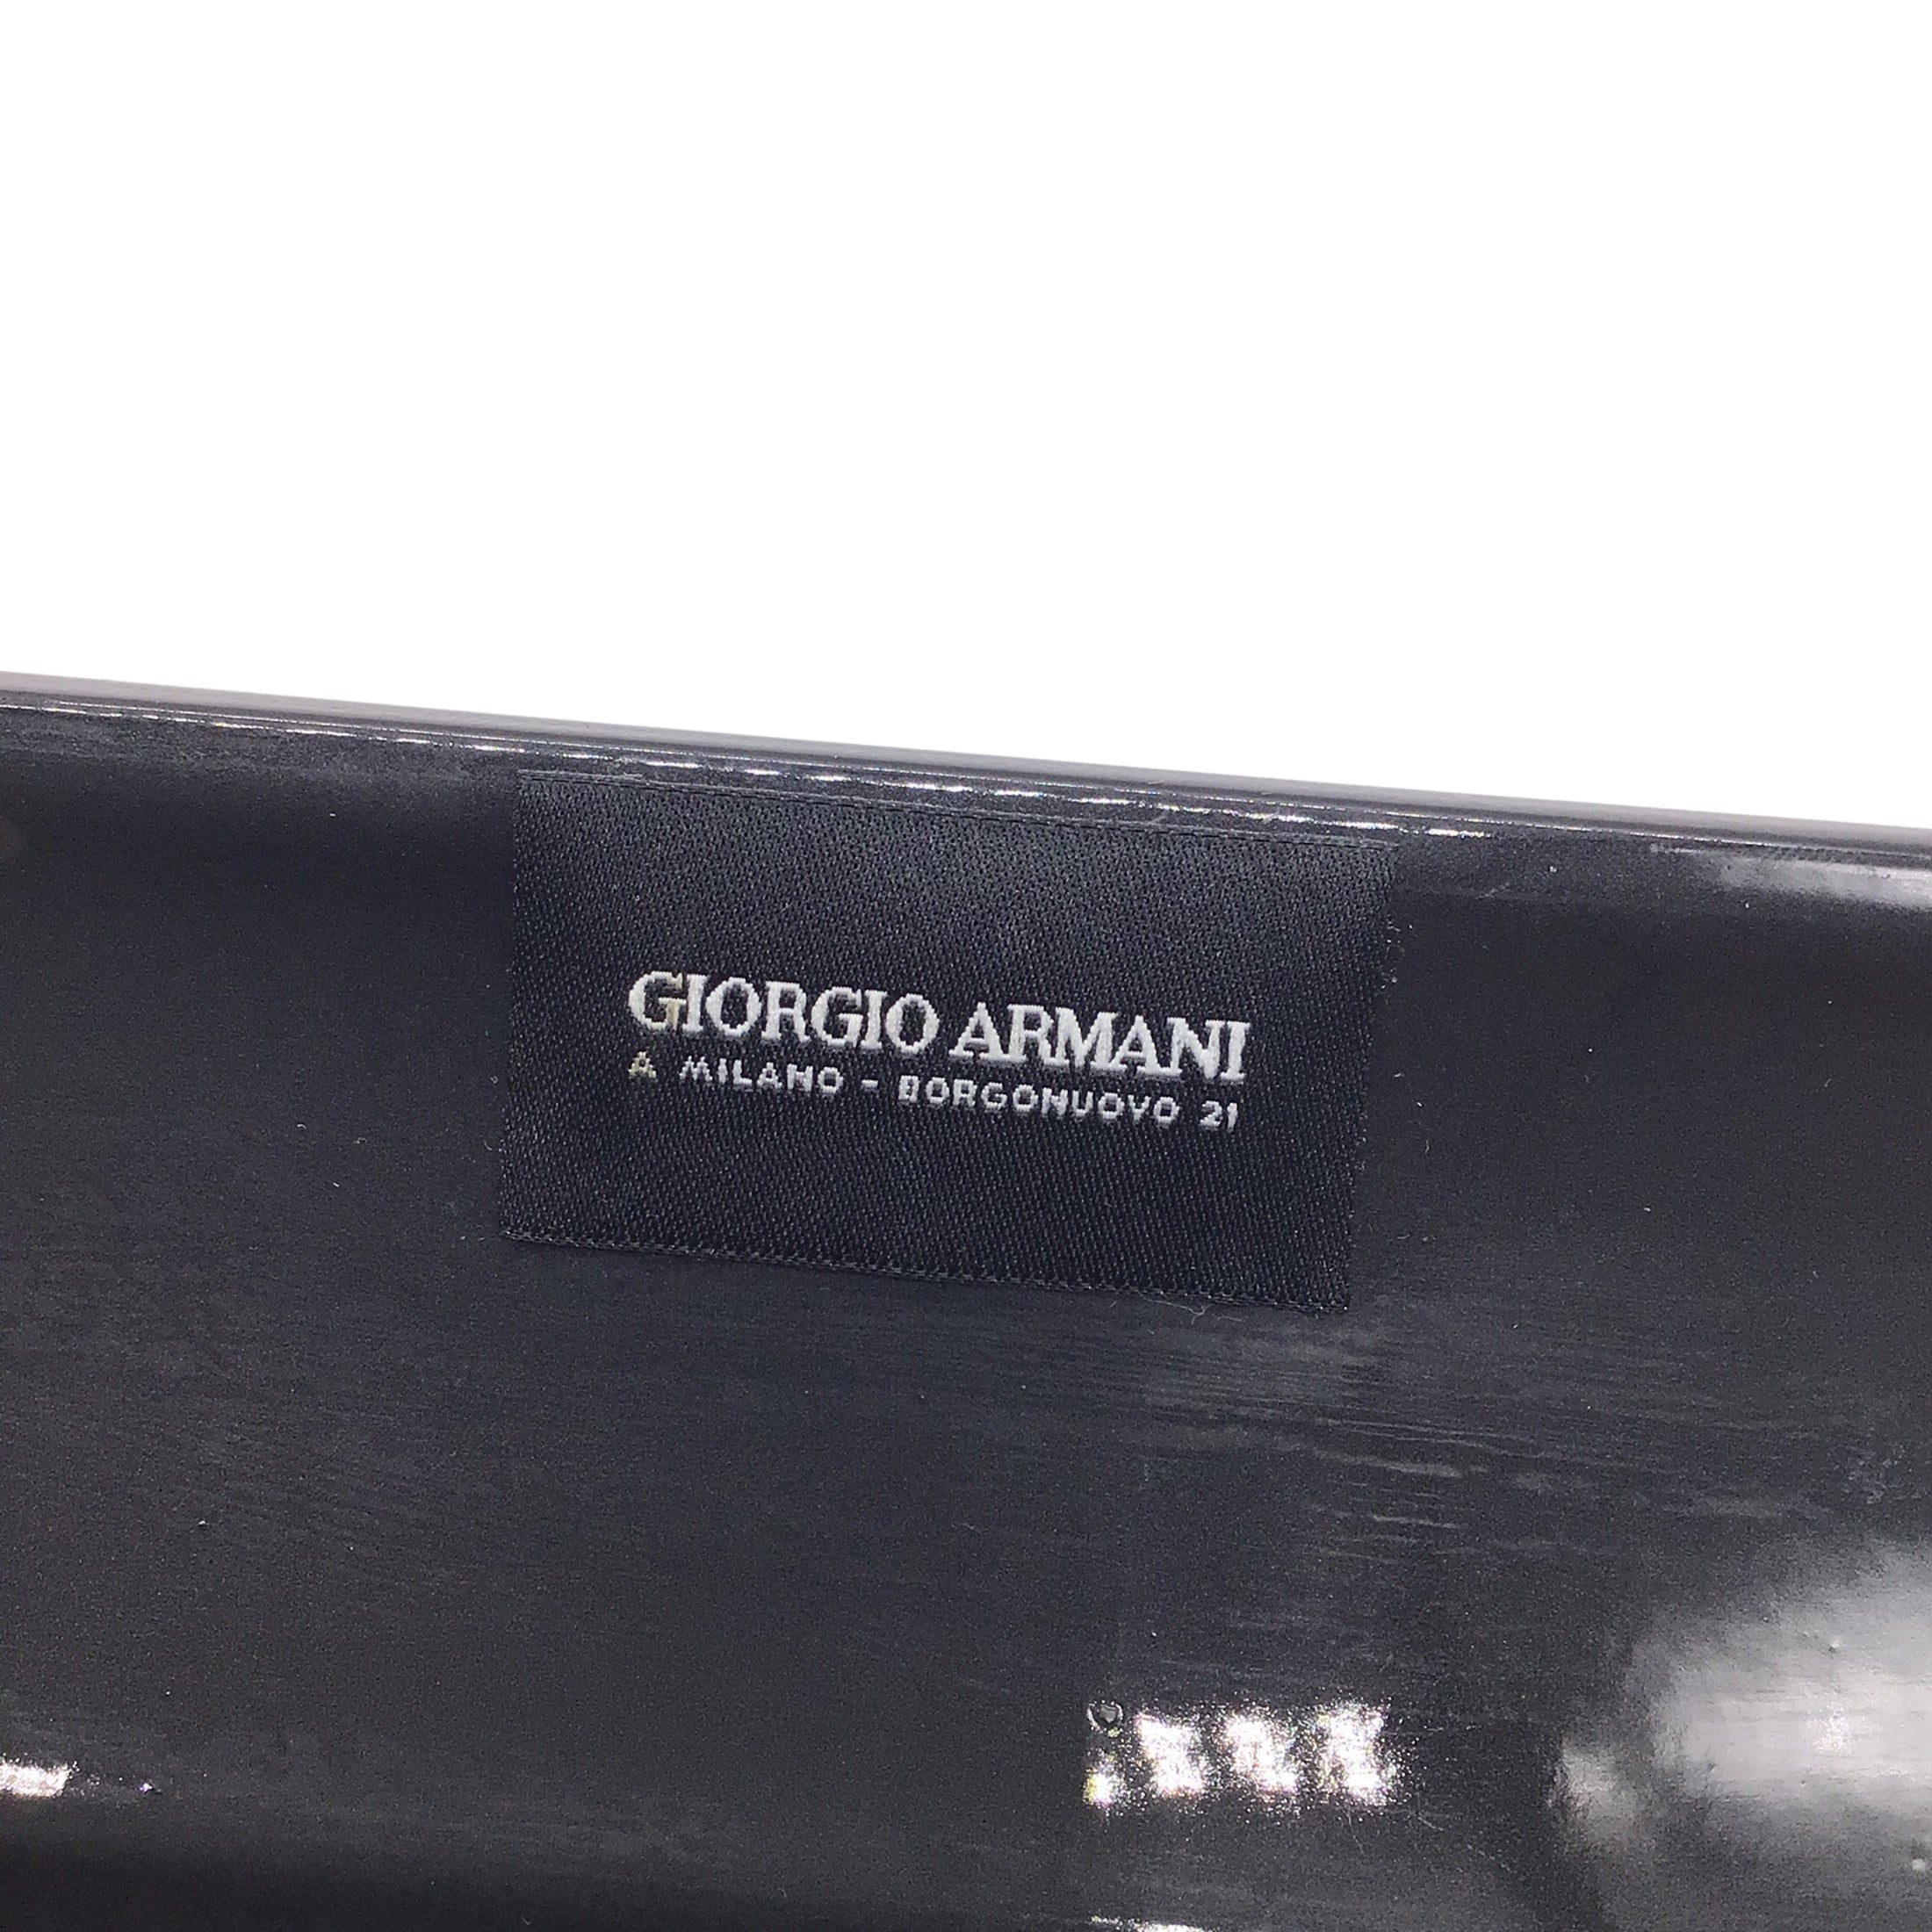 Giorgio Armani Vintage Graphite Grey / Black Bead Embellished Minaudiere Clutch Bag